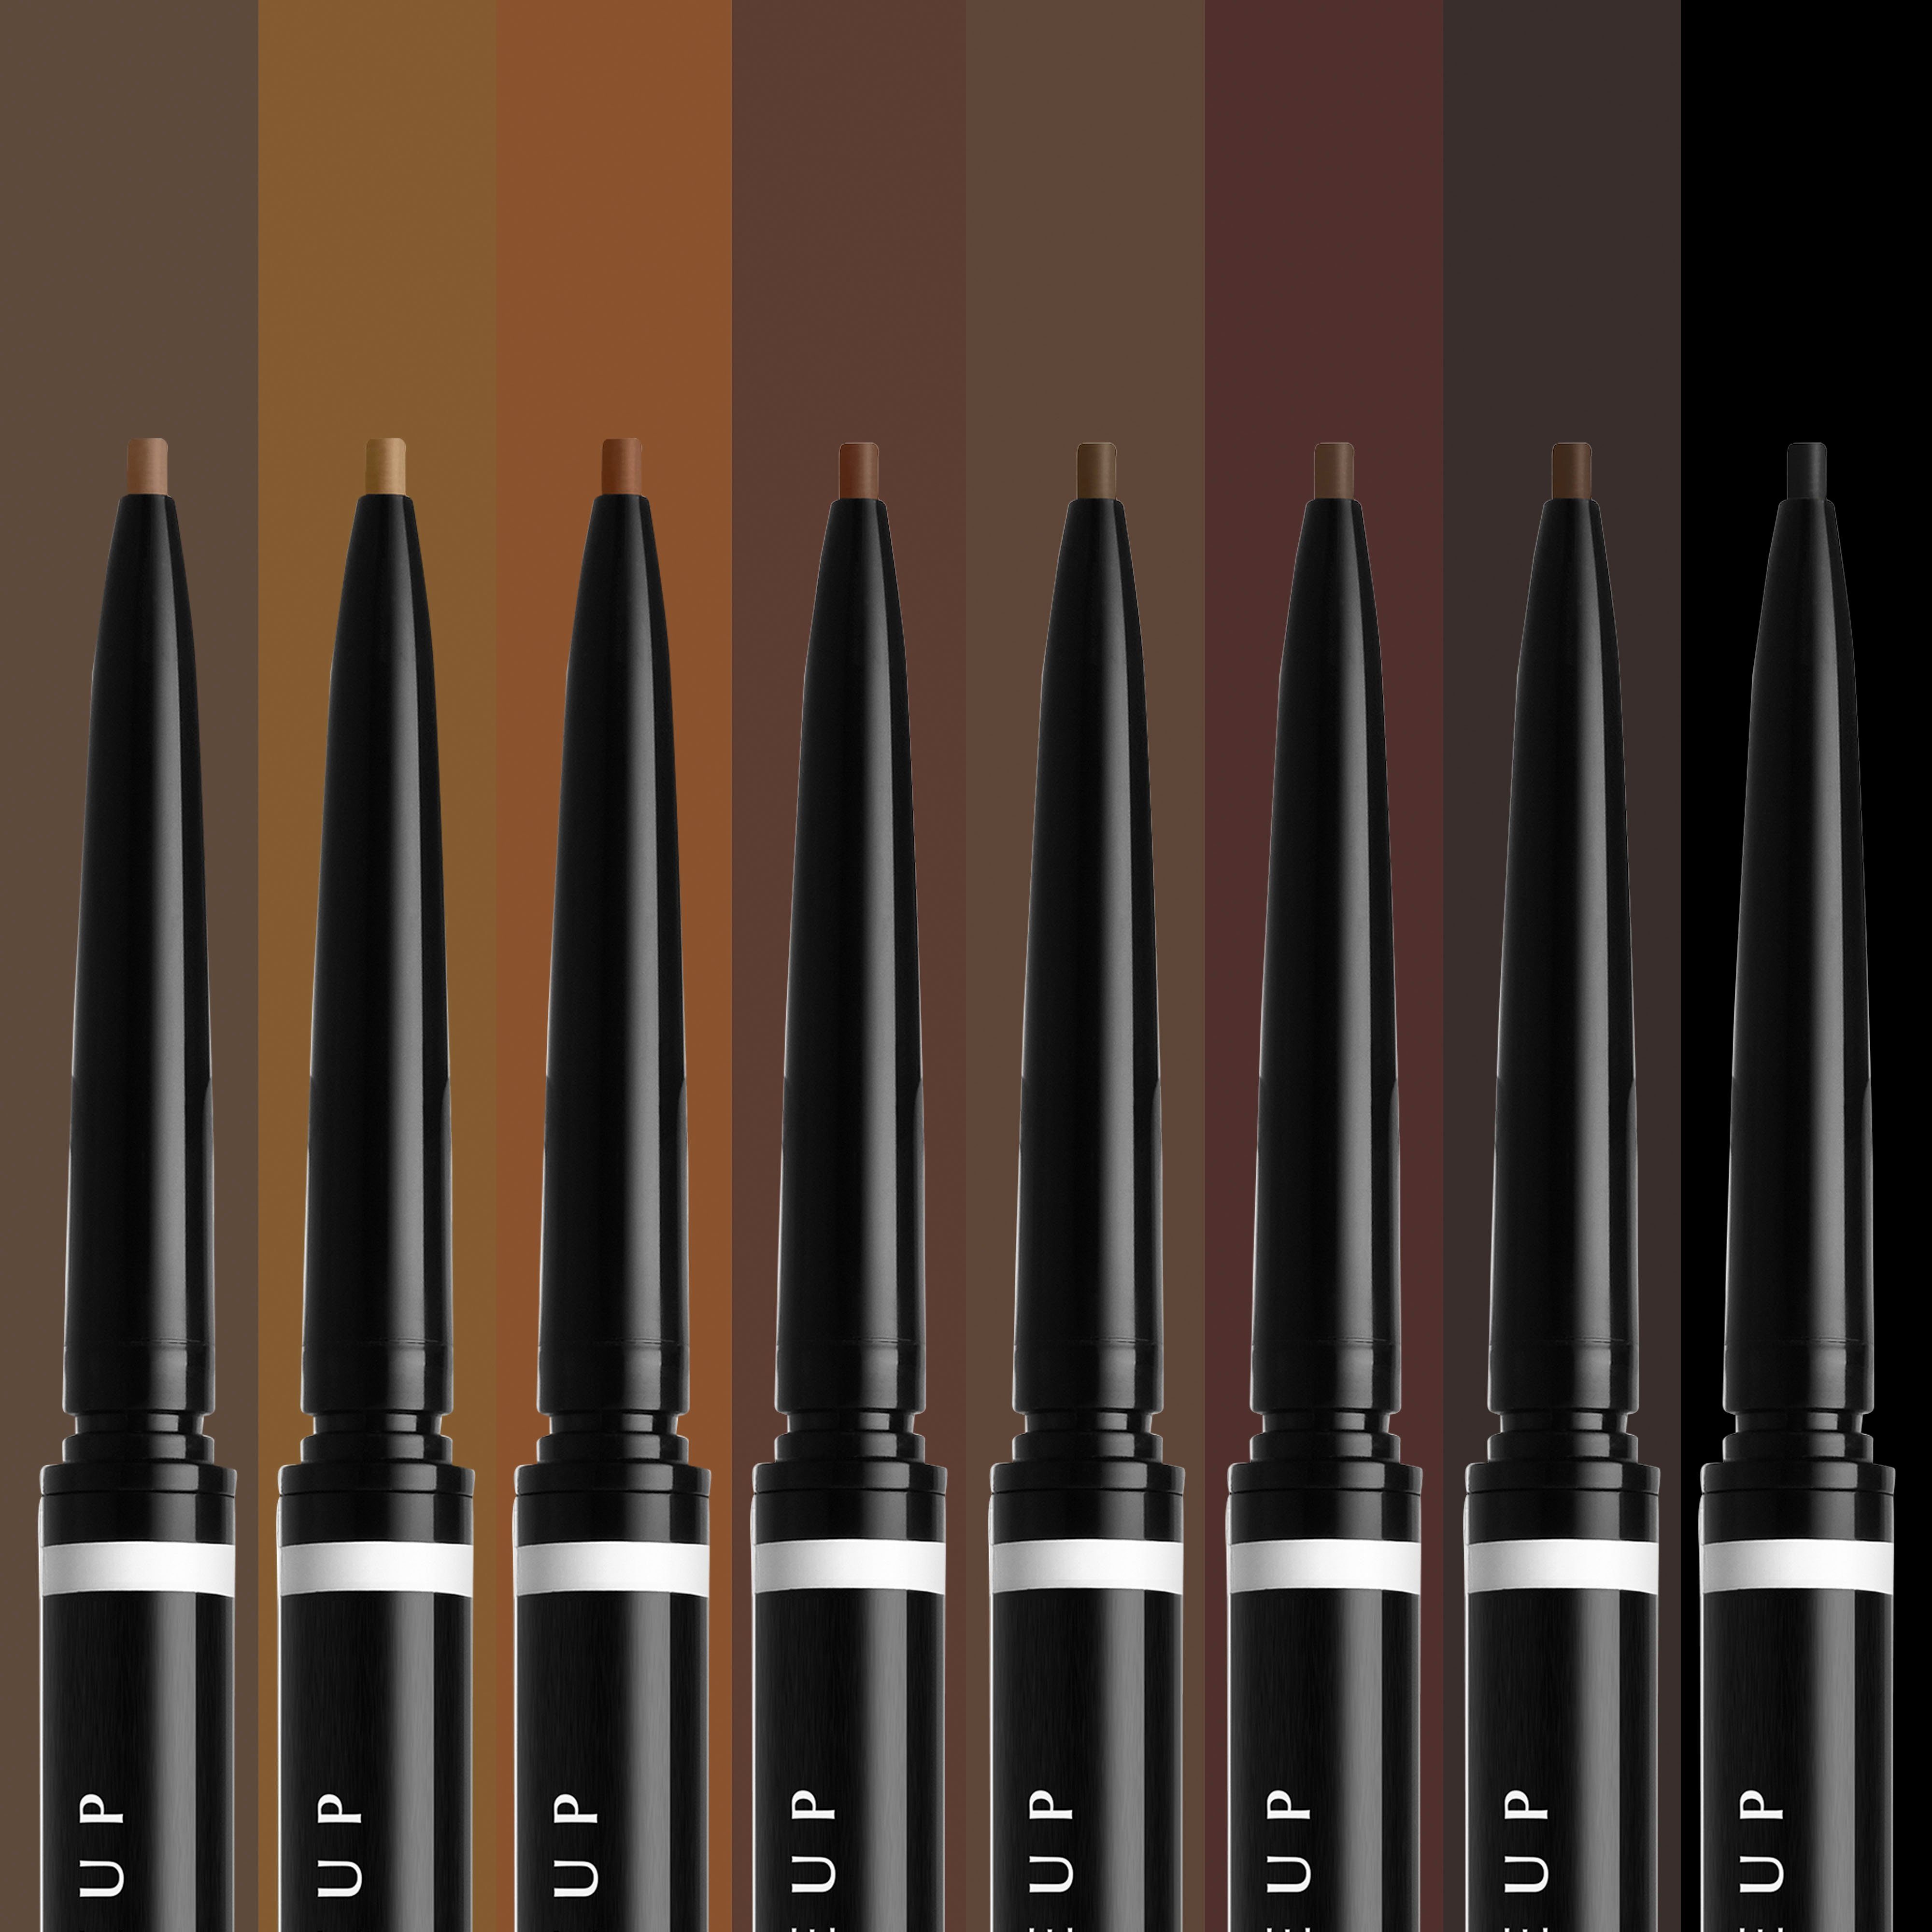 NYX Augenbrauen-Stift Professional Makeup Micro Pencil auburn Brow